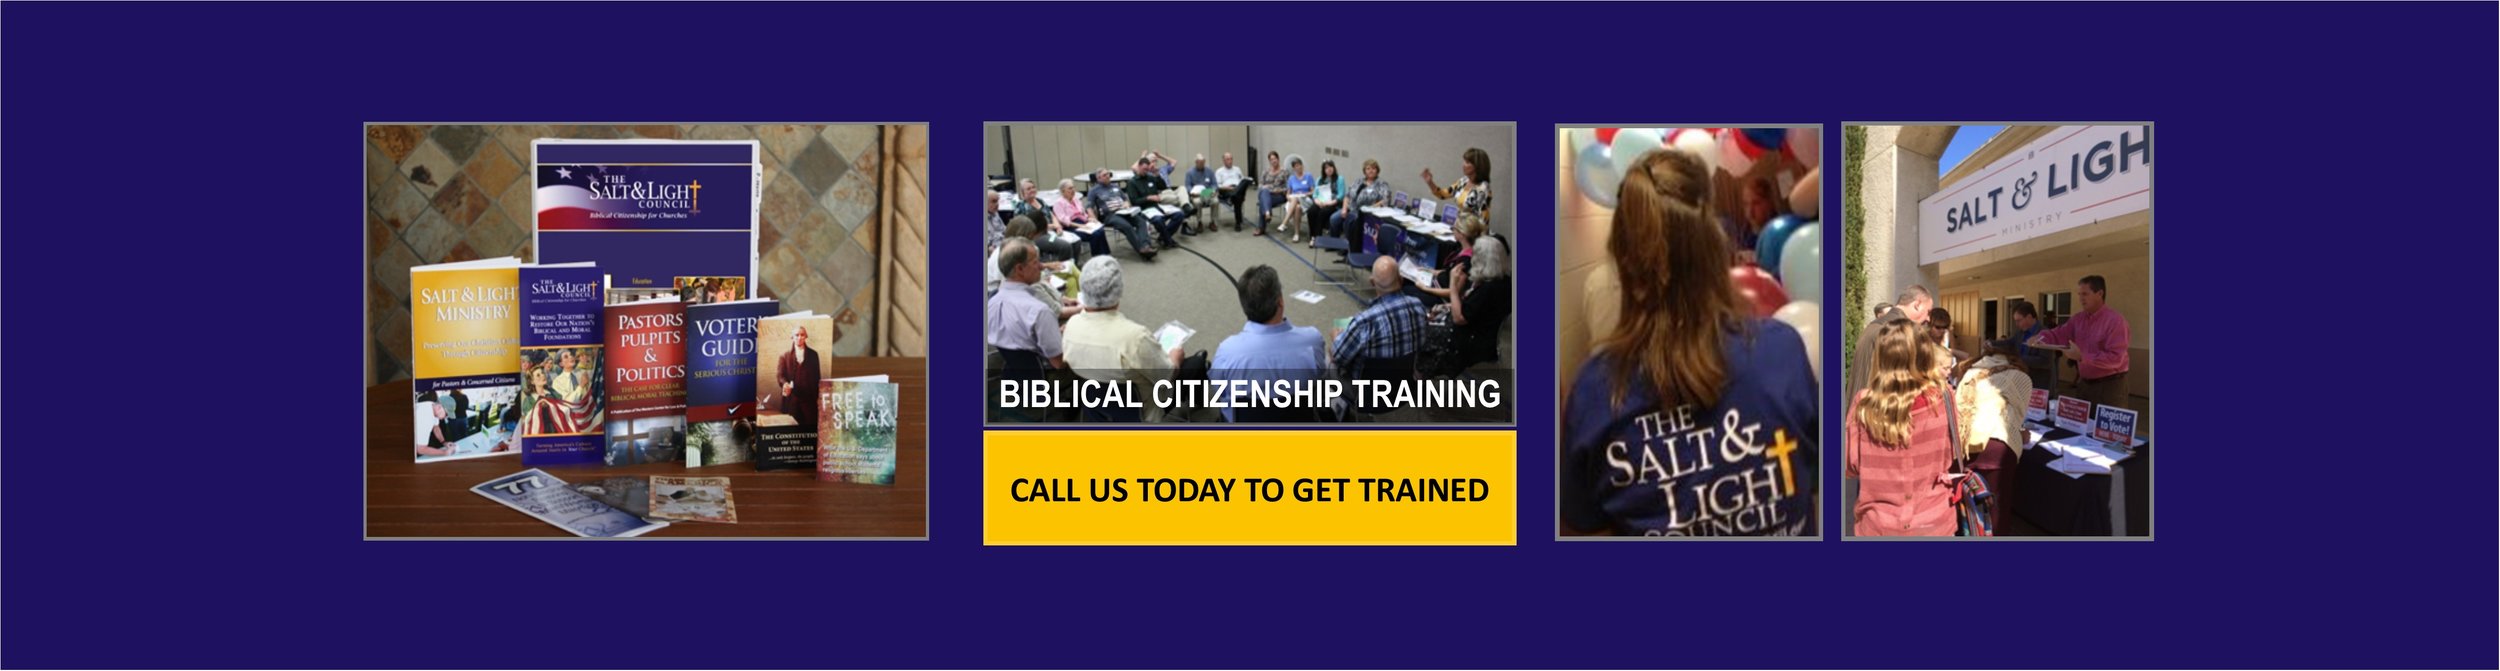 Get Trained in Biblical Citizenship.jpg